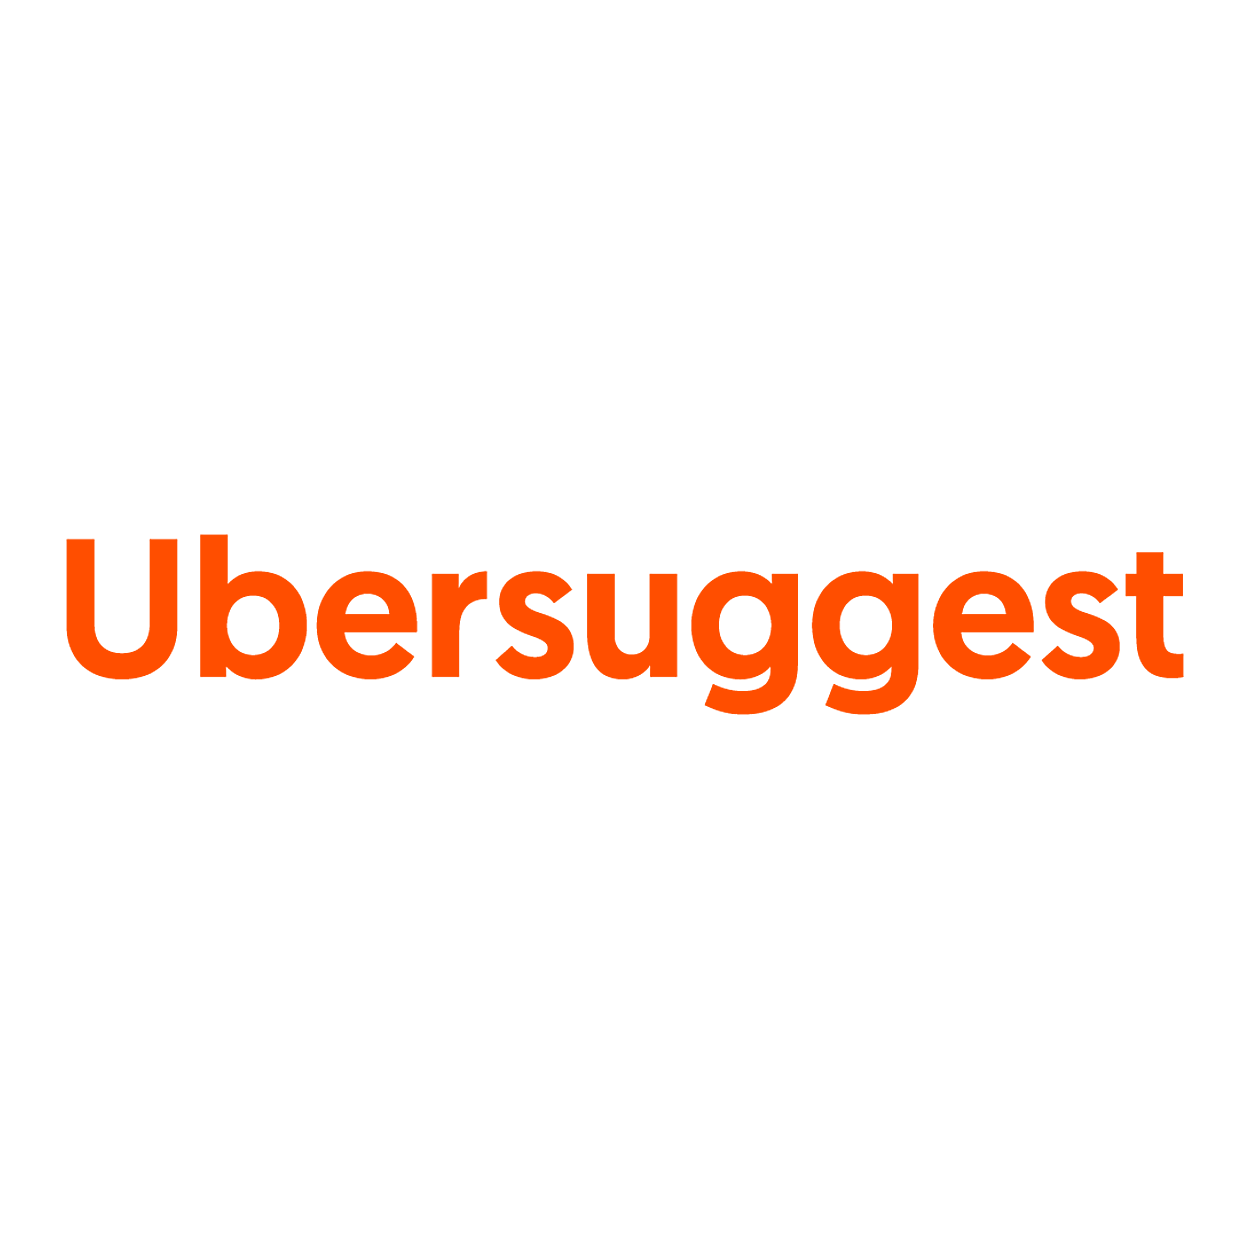 Ubersuggest Logo Transparent Image